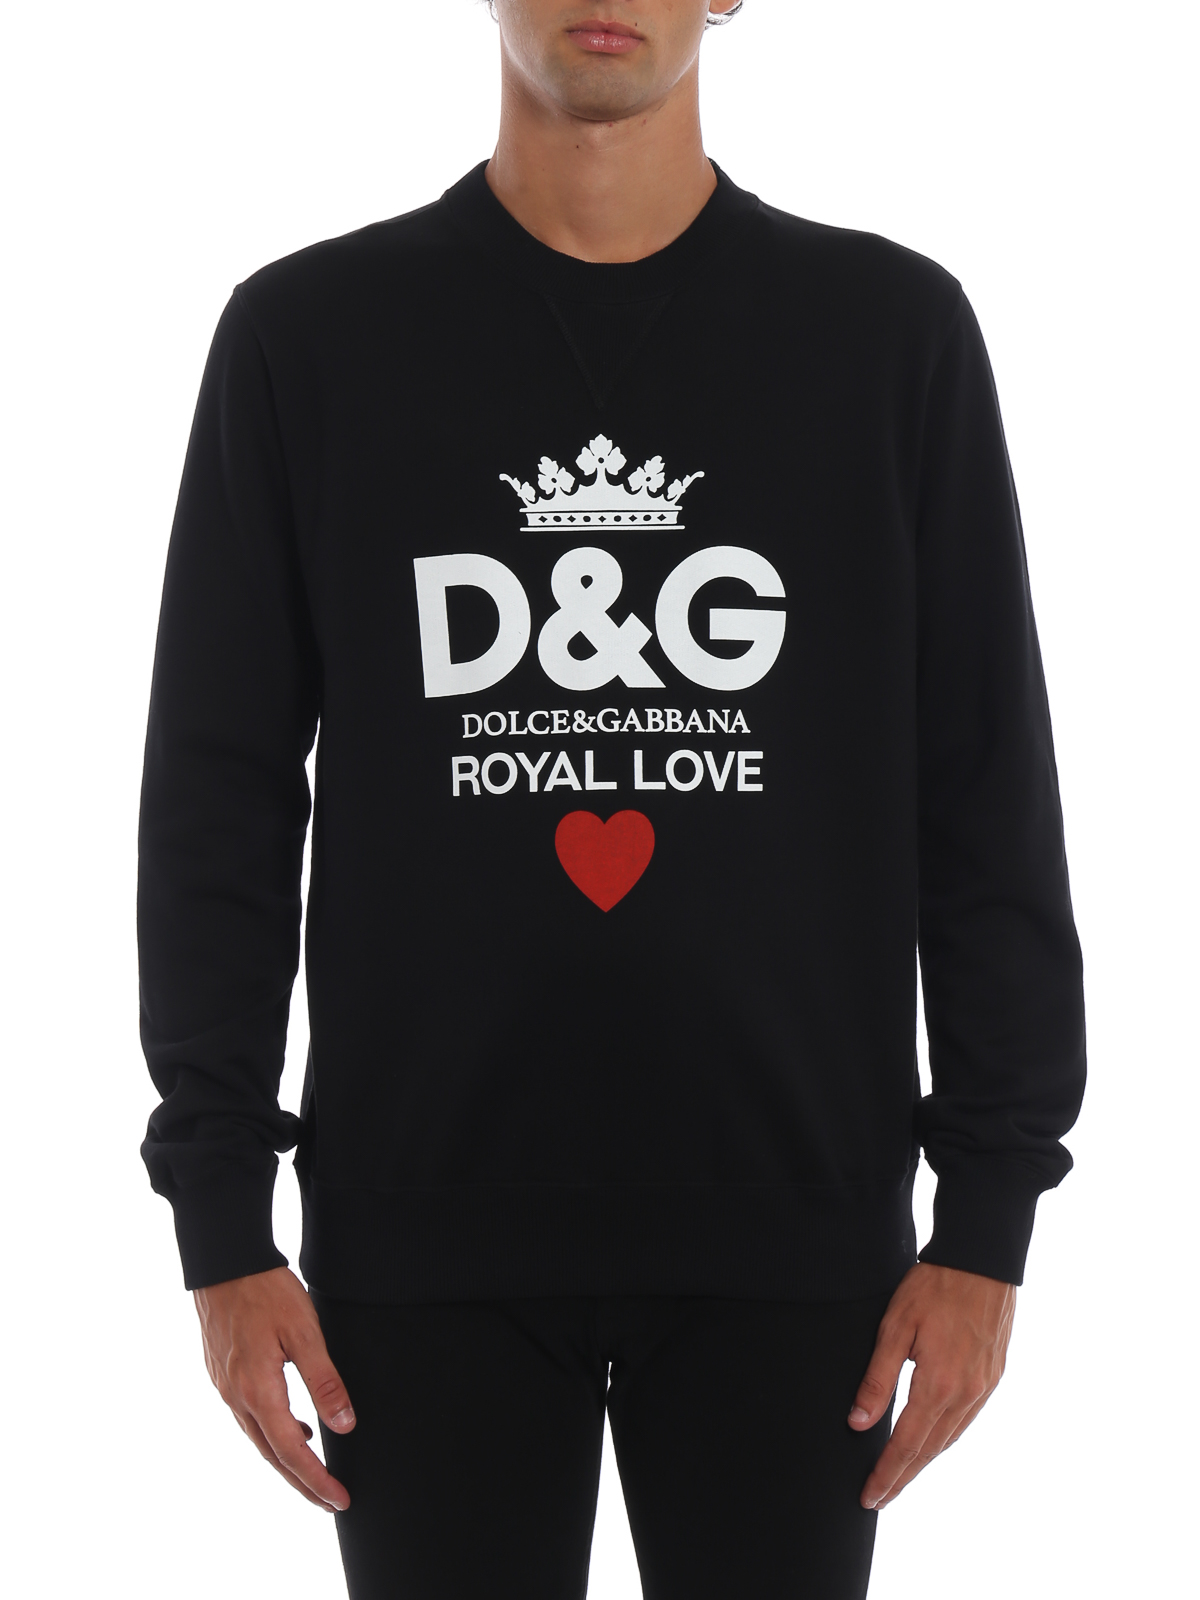 Sudaderas y suéteres Dolce Gabbana - Sudadera - Royal Love - G9MI5TFU7DUN0000